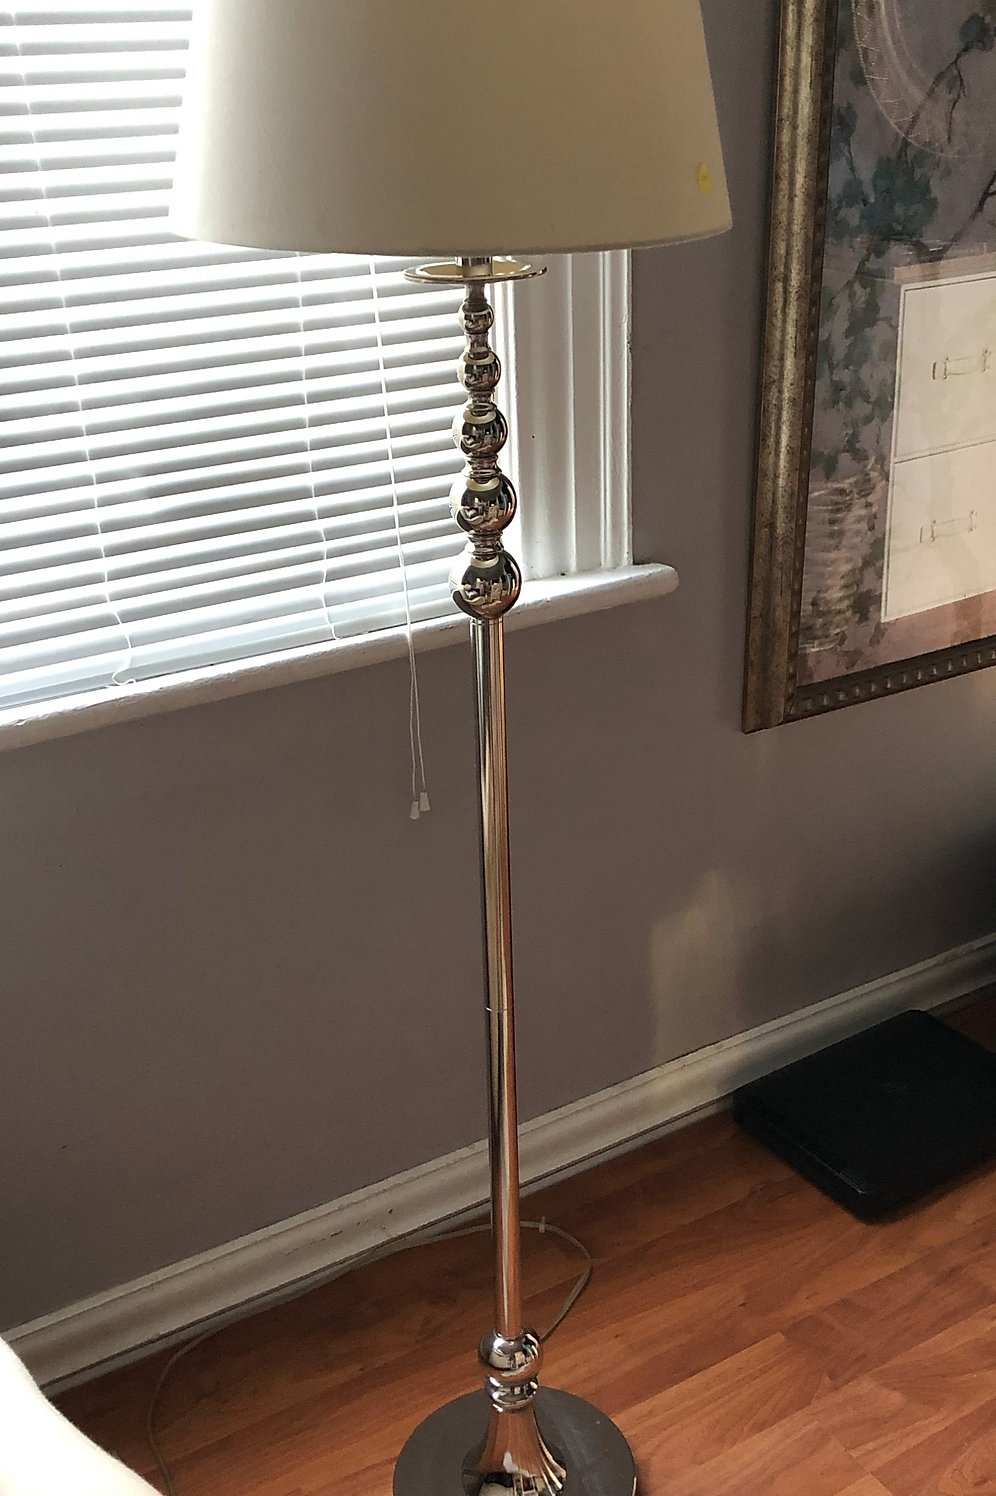 Ralph Lauren Polished Nickel Floor Lamp intended for size 996 X 1496